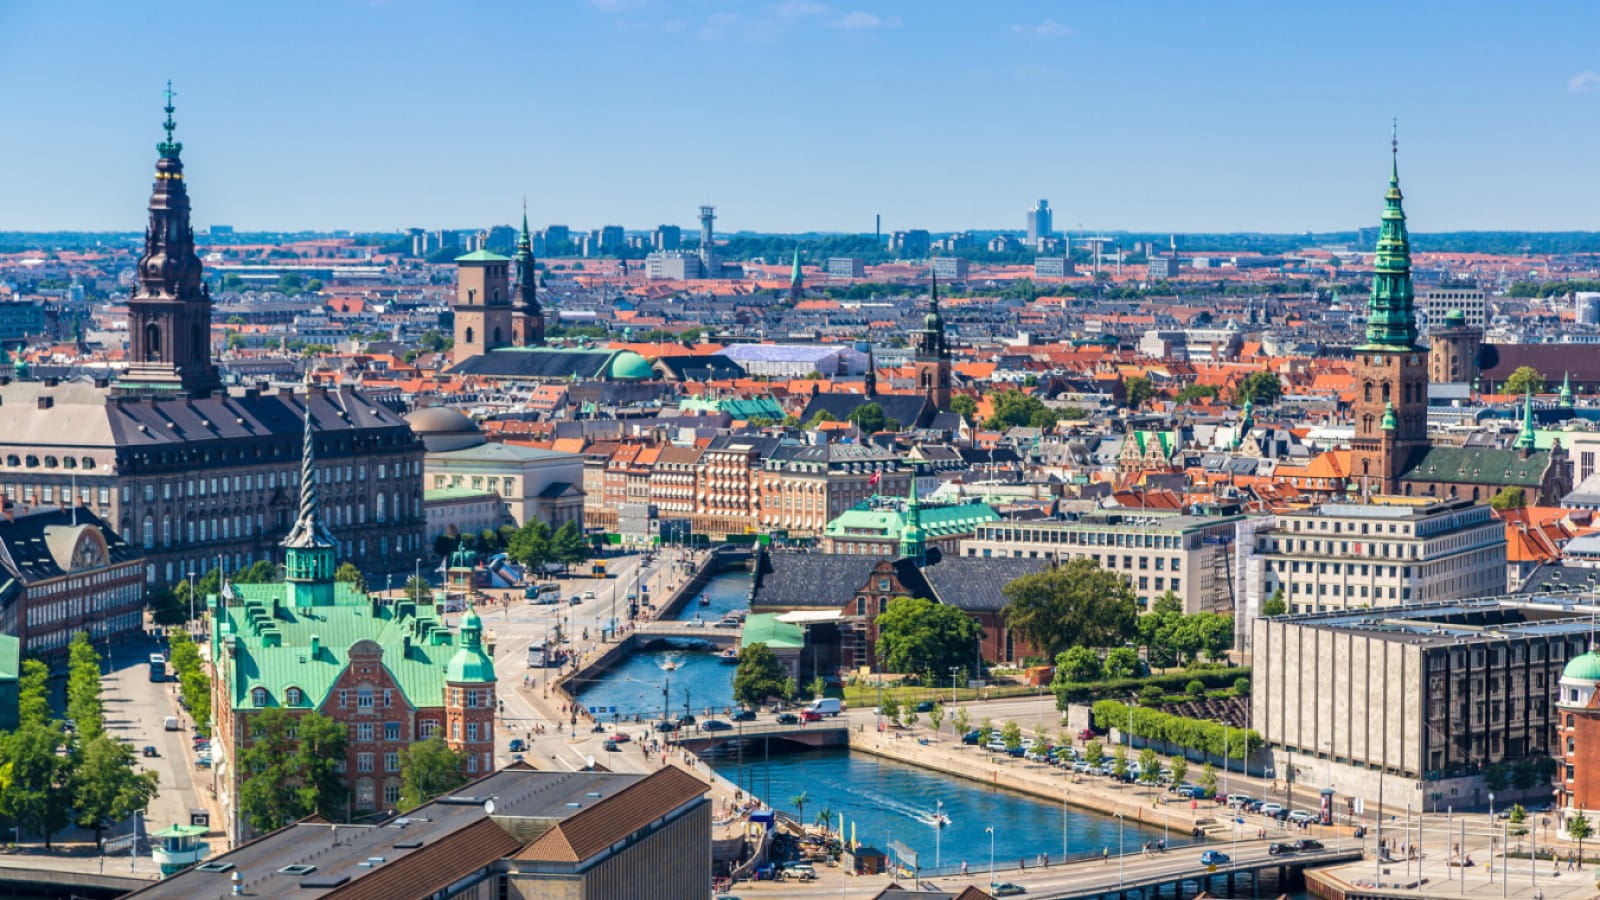 Cityscape photo of Copenhagen, Denmark.